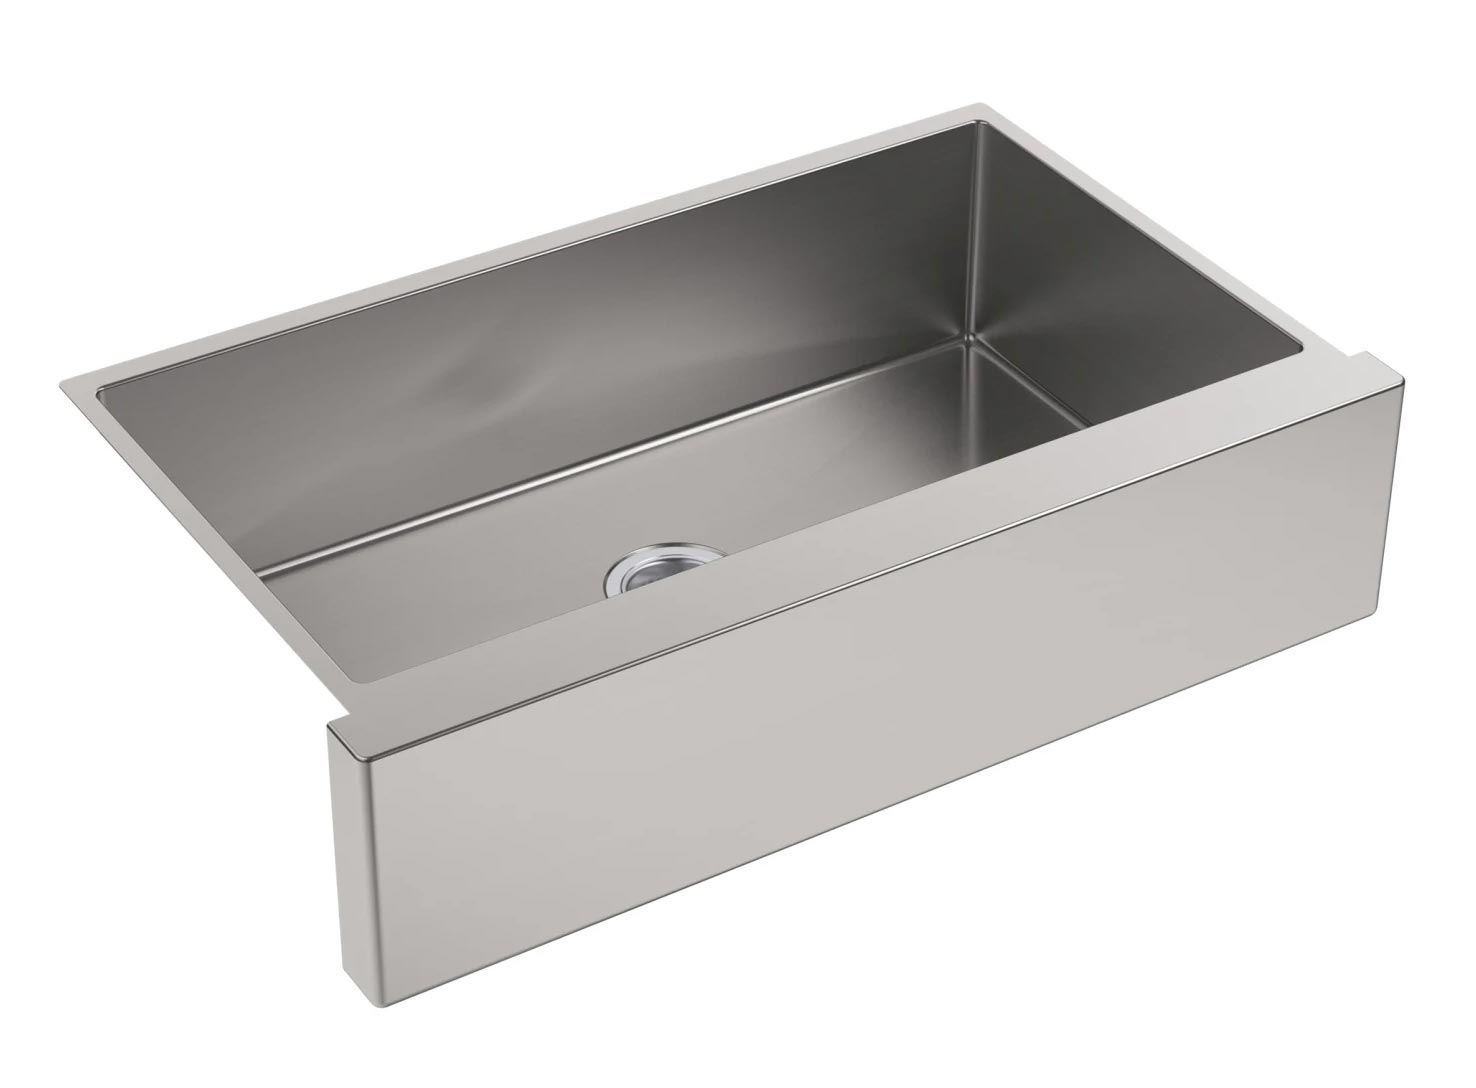 Kohler Strive Single Basin Stainless Steel Apron Front Kitchen Sink Image